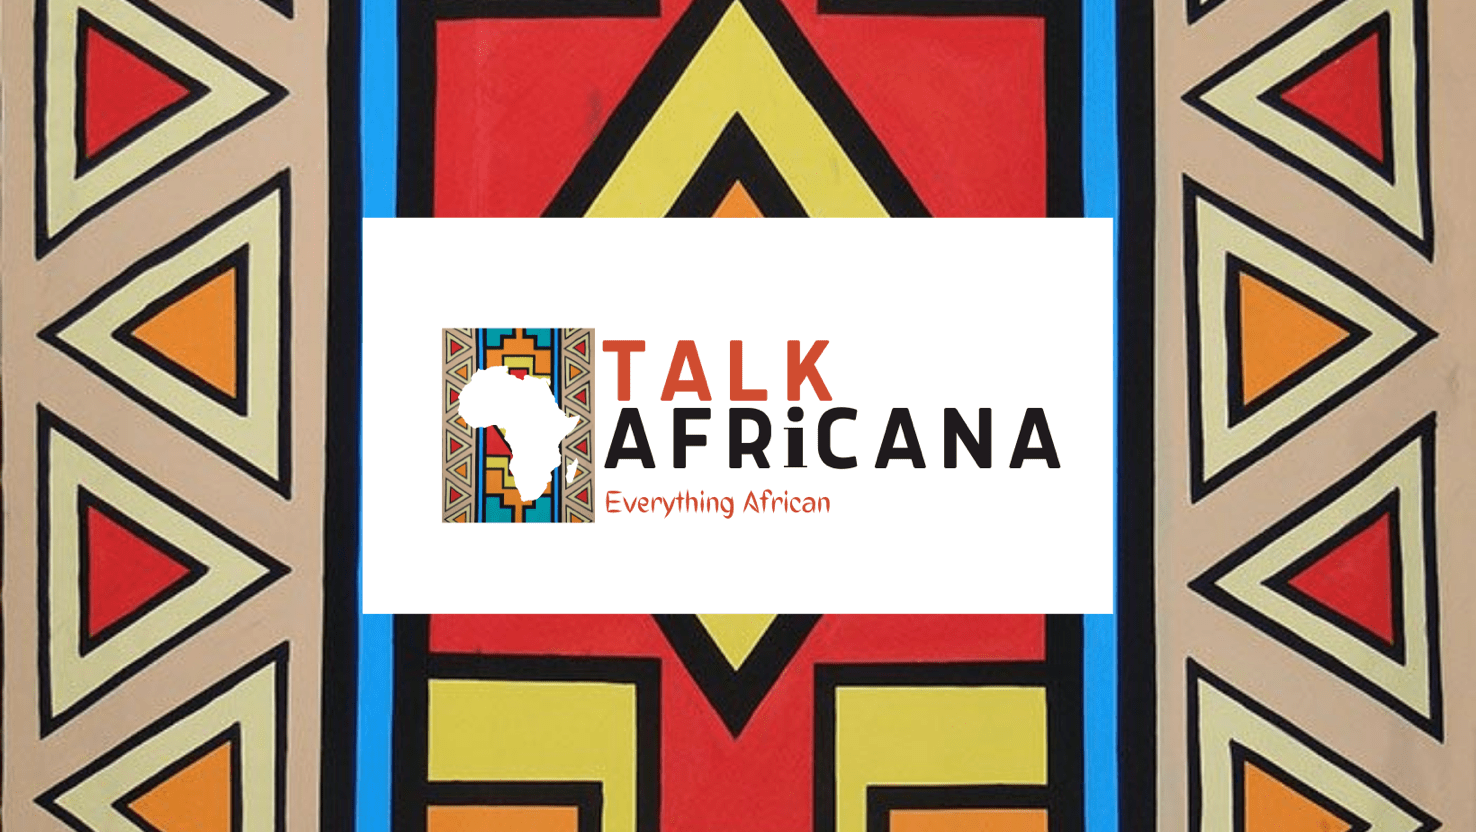 Talkafricana.com